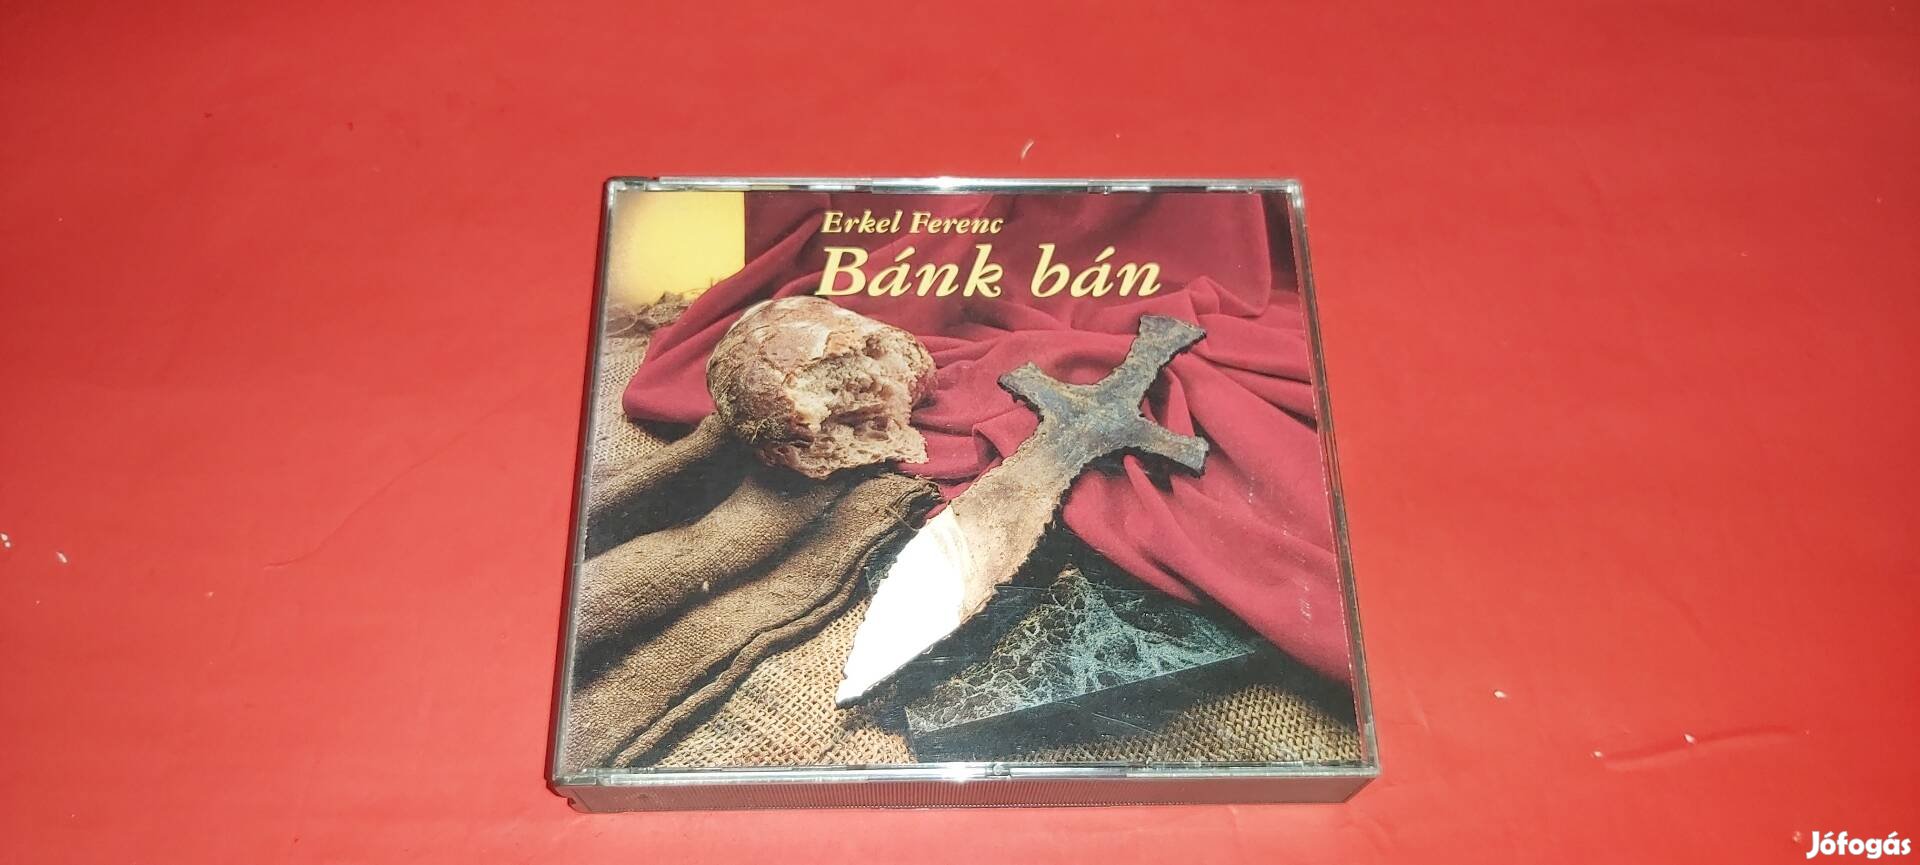 Erkel Ferenc Bánk Bánk dupla Promo Cd box 1993 Opera